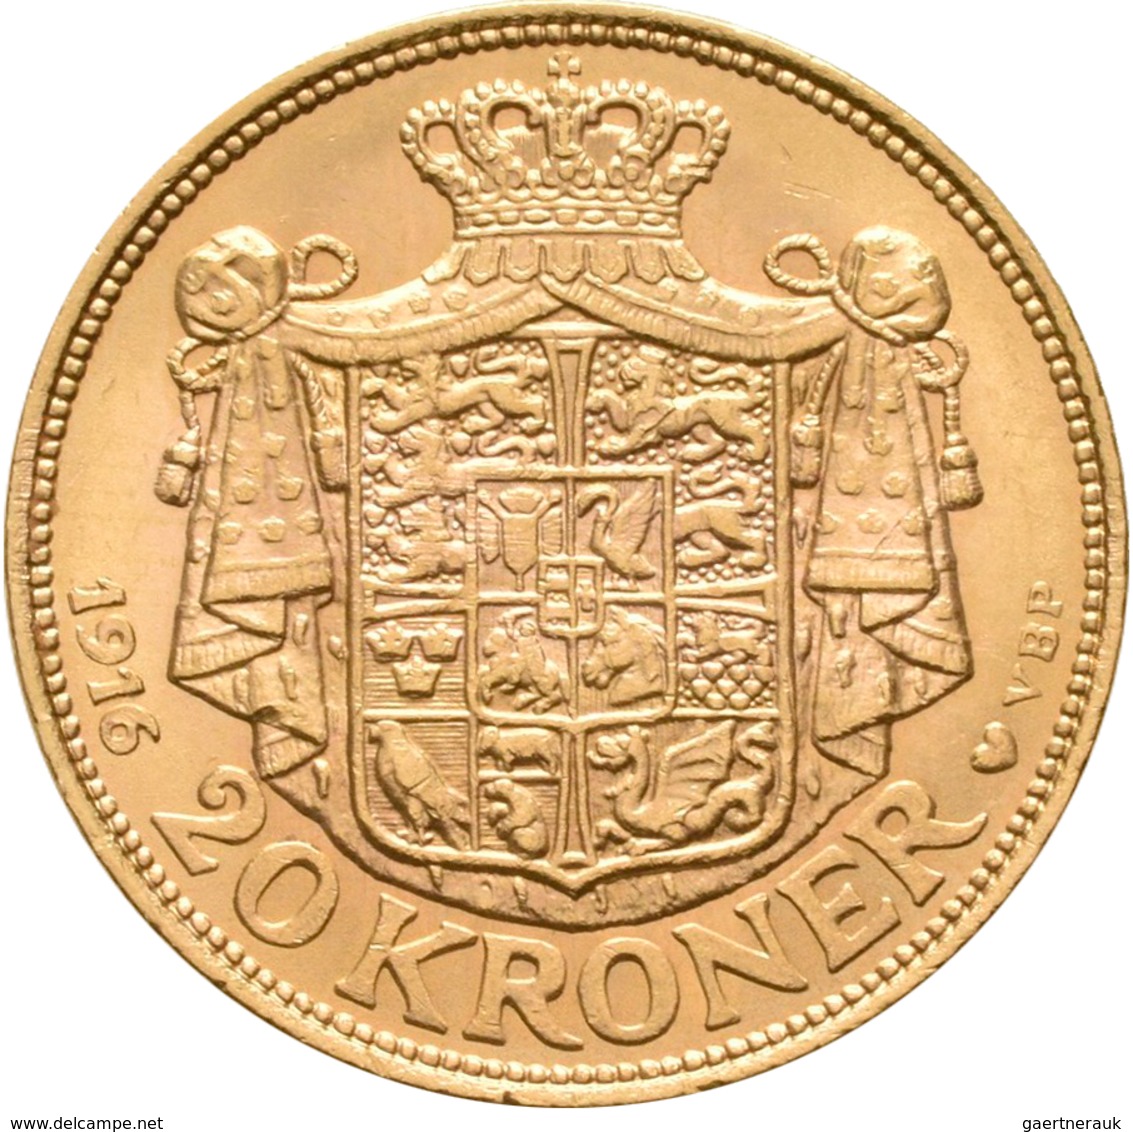 Dänemark - Anlagegold: Christian X. 1912-1947: 20 Kronen 1916, KM# 817.1, Friedberg 299. 8,95 G, 900 - Dänemark